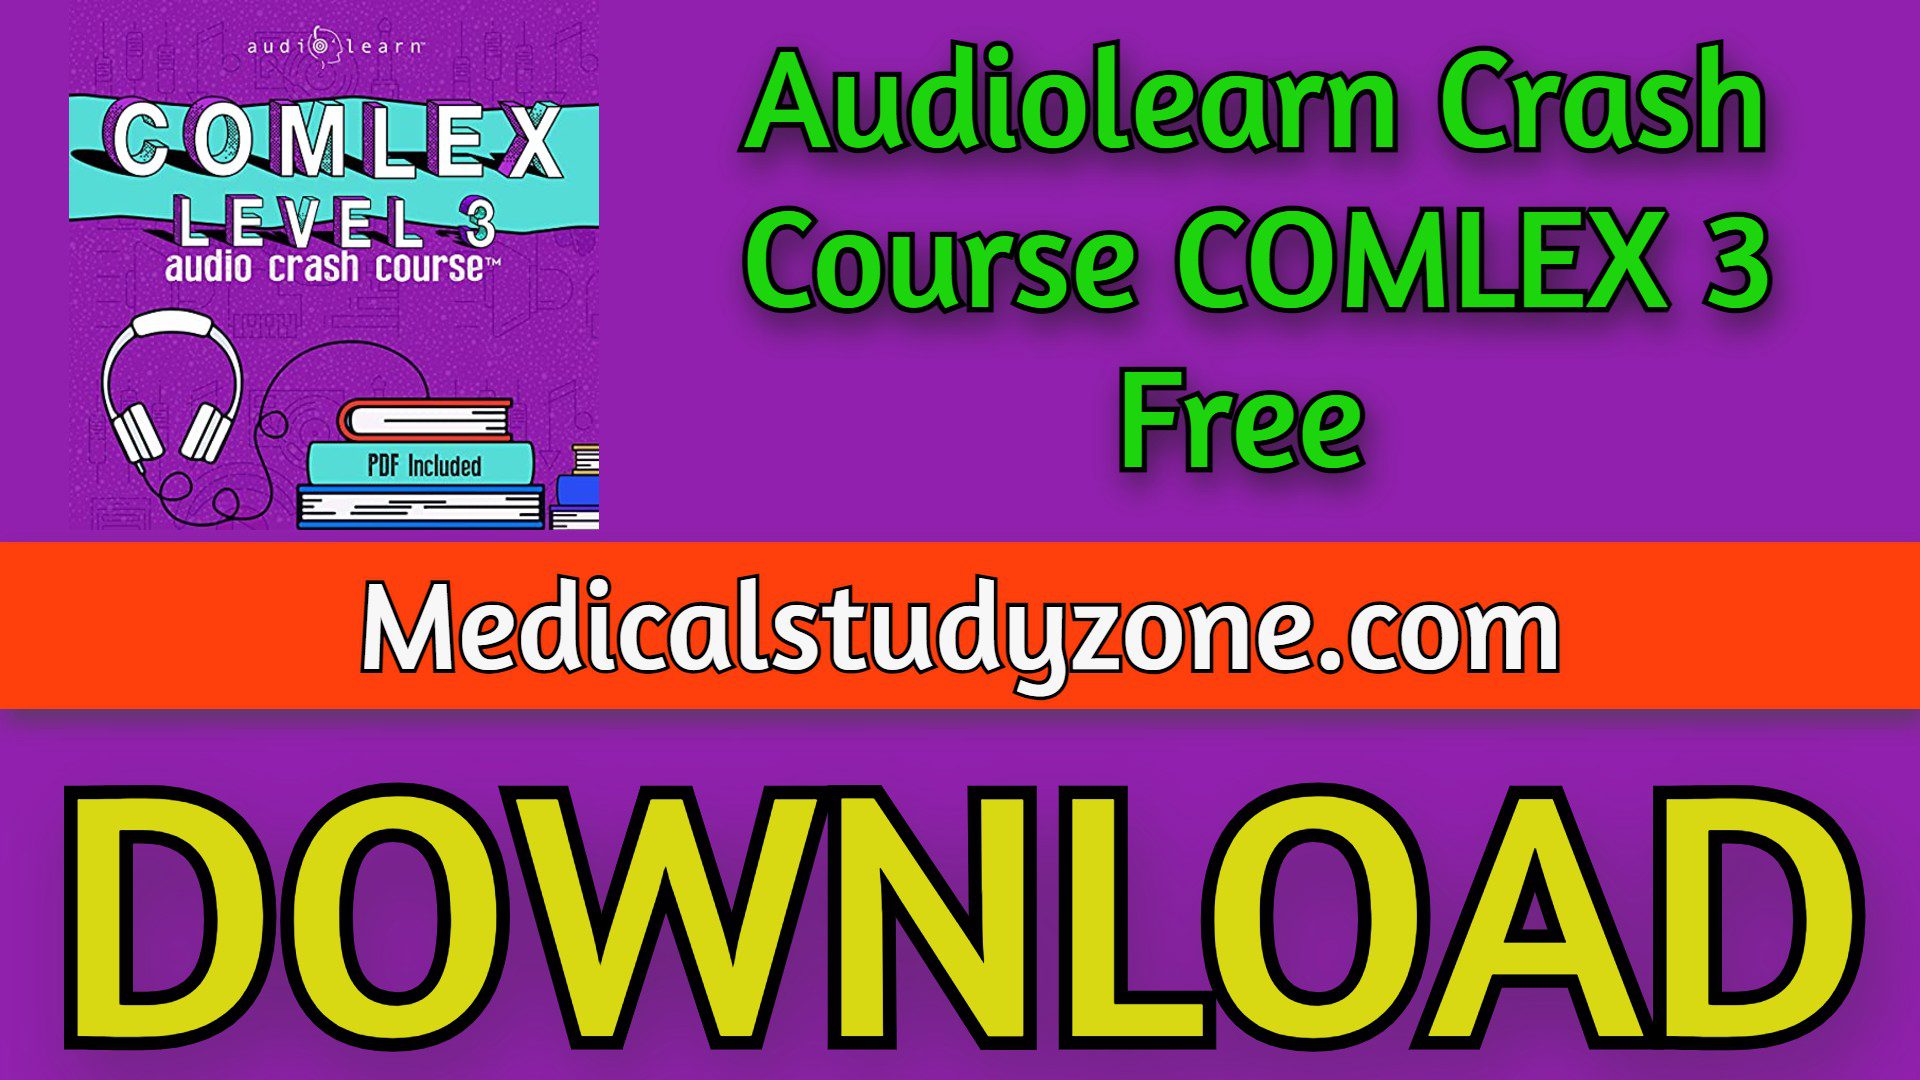 Audiolearn Crash Course COMLEX 3 2021 Free Download